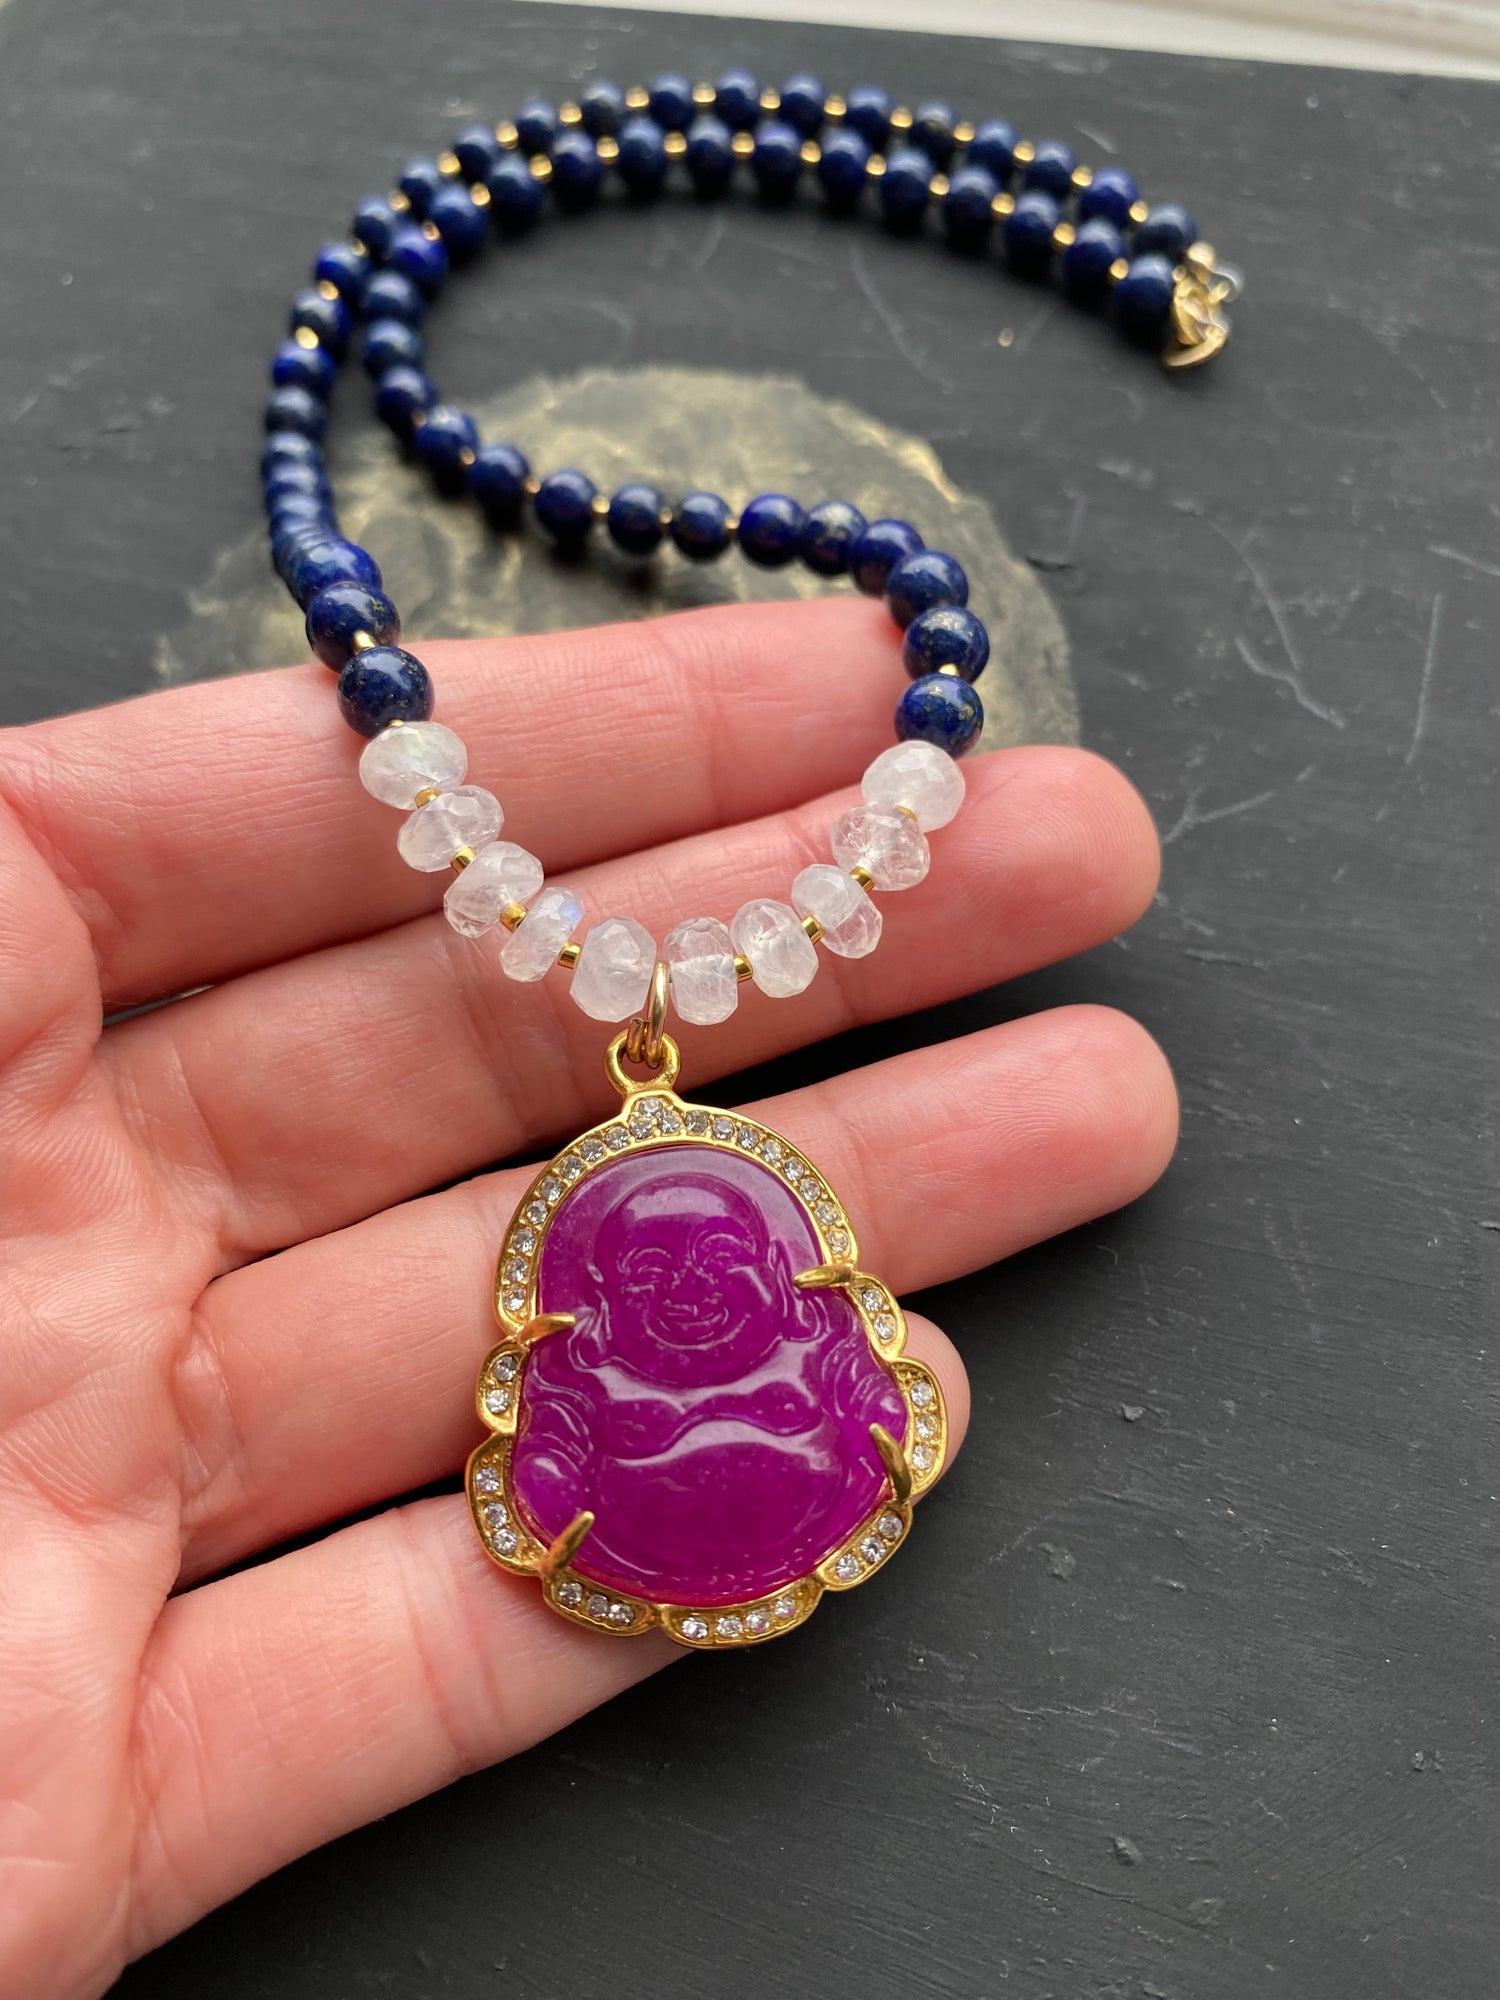 Gemstone Buddha Necklace Handmade - Moon Room Shop and Wellness